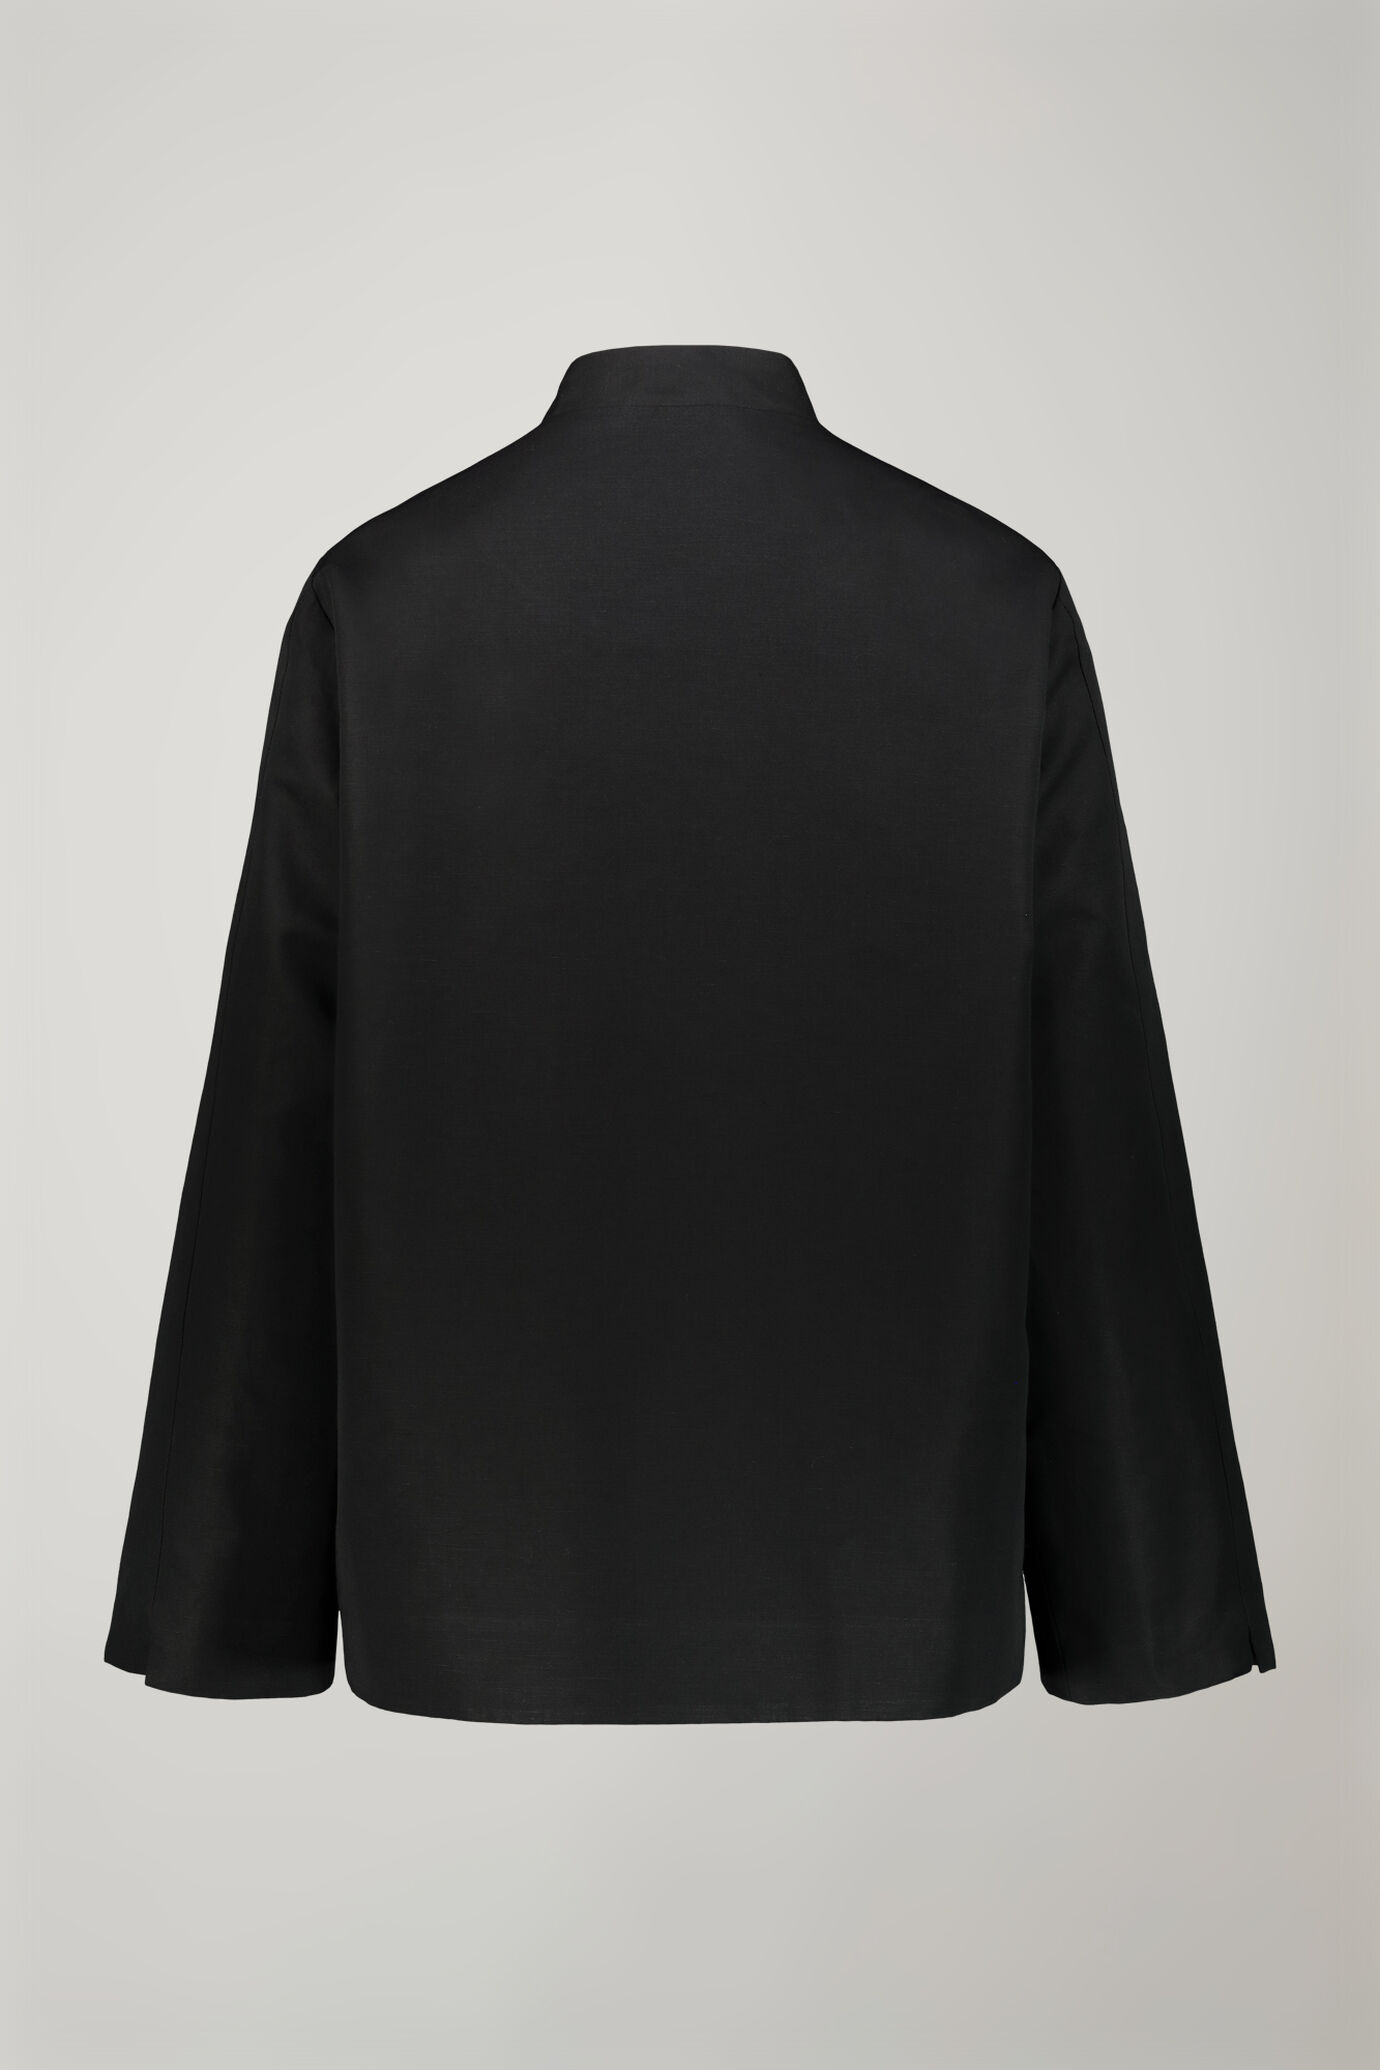 Women’s blazer with Korean collar linen and cotton blend regular fit image number 5